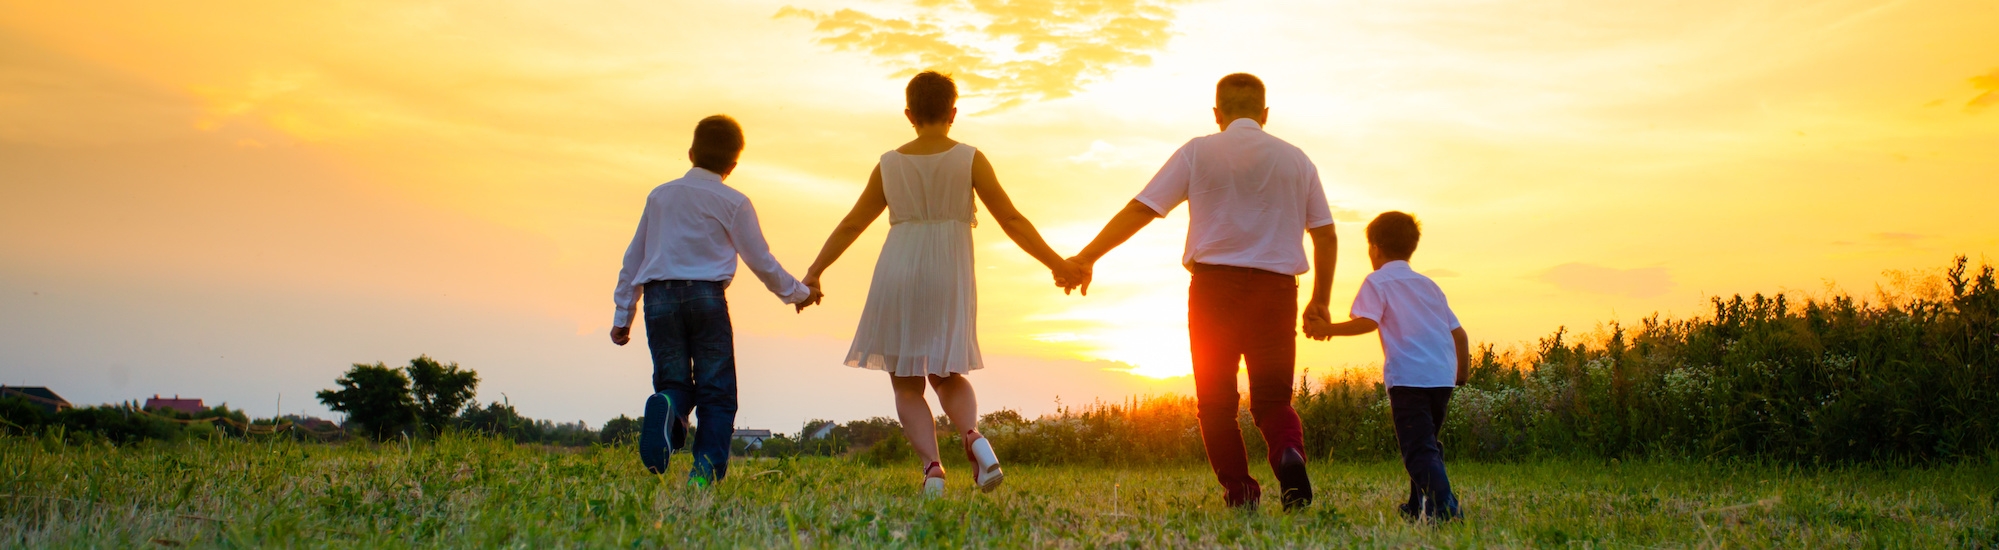 Family of 4 holding hands, running toward the sunset